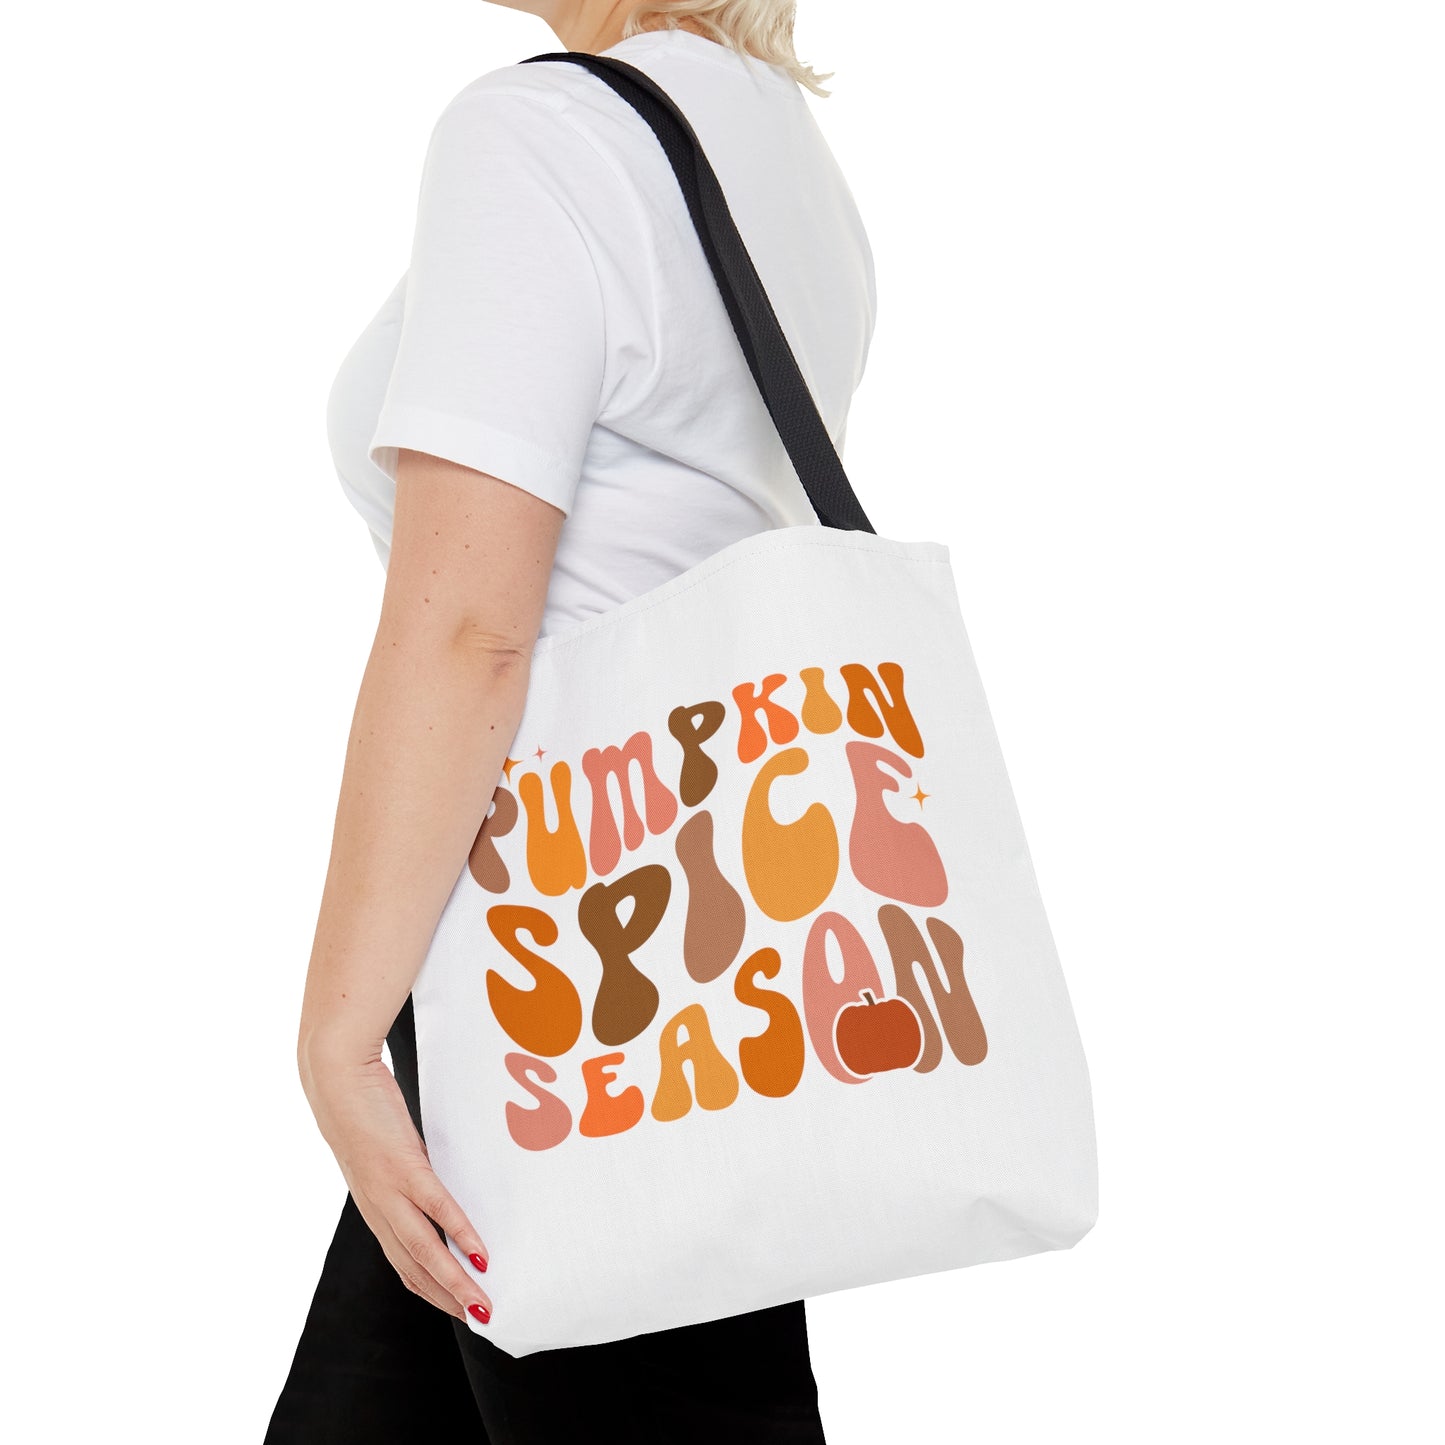 Pumpkin Spice Season Retro Tote Bag